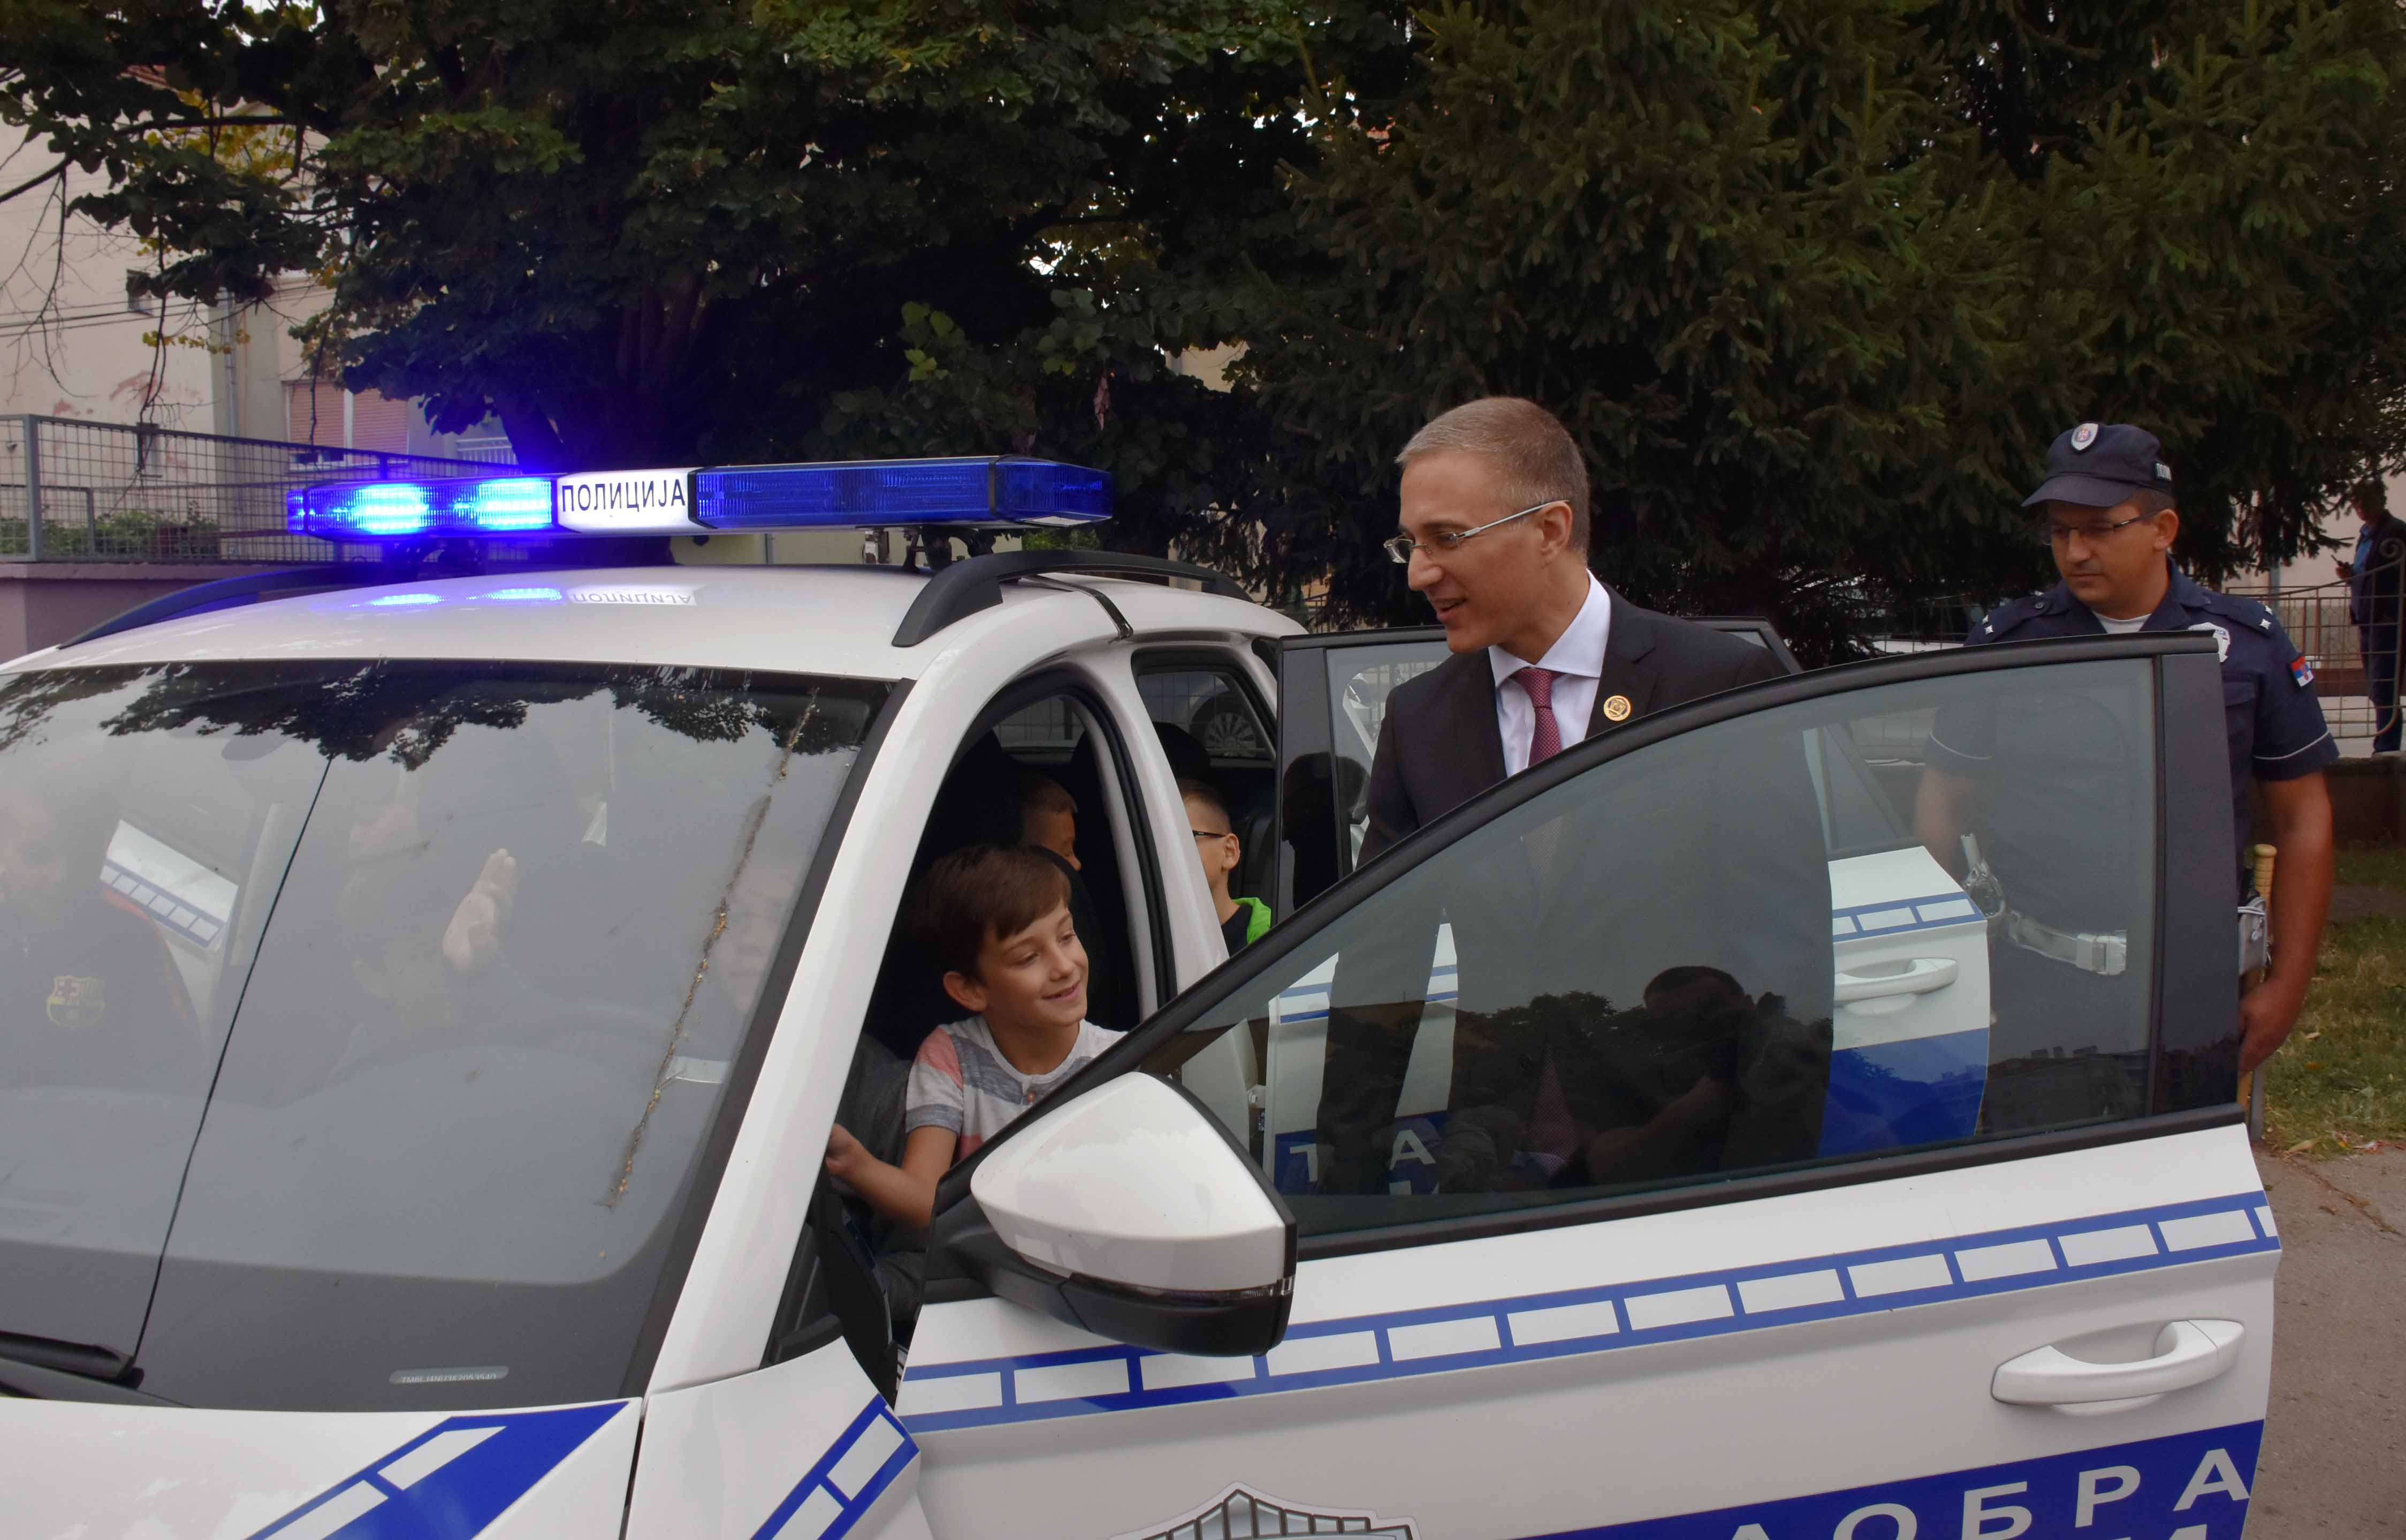 Ministar Stefanović apelovao na vozače da i dalјe budu oprezni i pažlјivi kako bi naša deca bila bezbedna